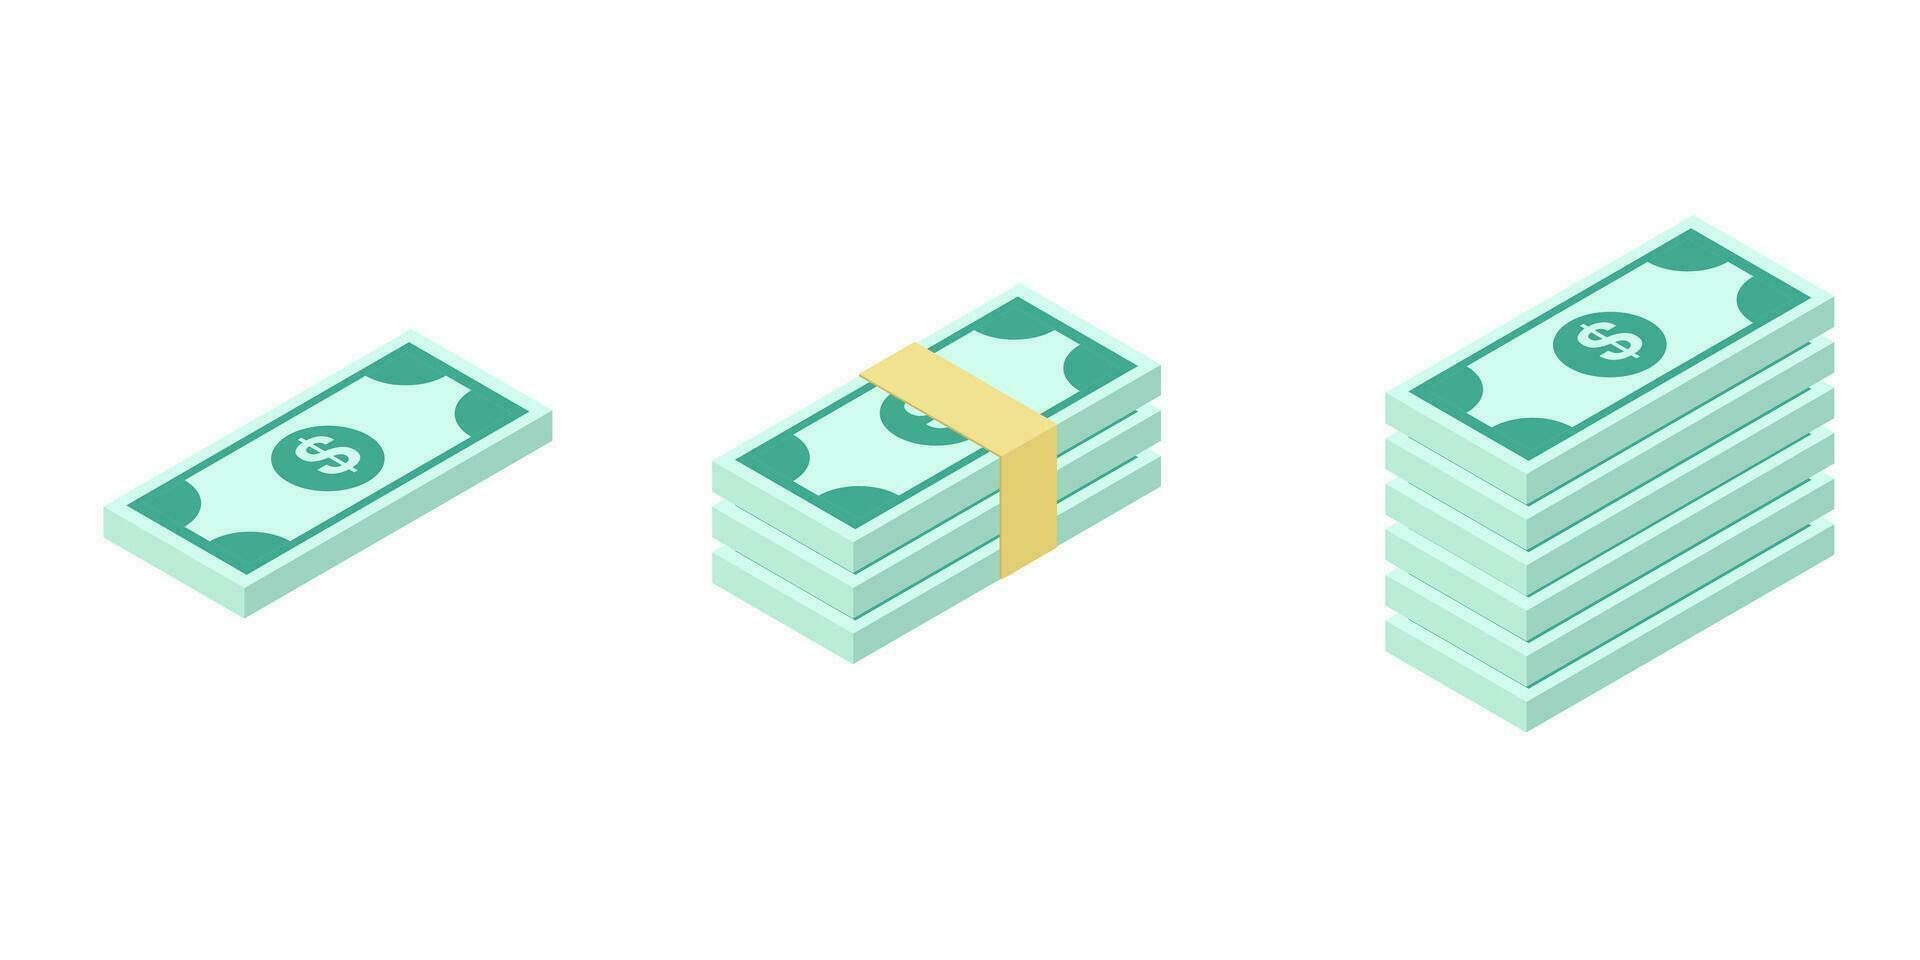 3D Isometric Money Flat Vector Concep Illustration. Set of Paper money dollar